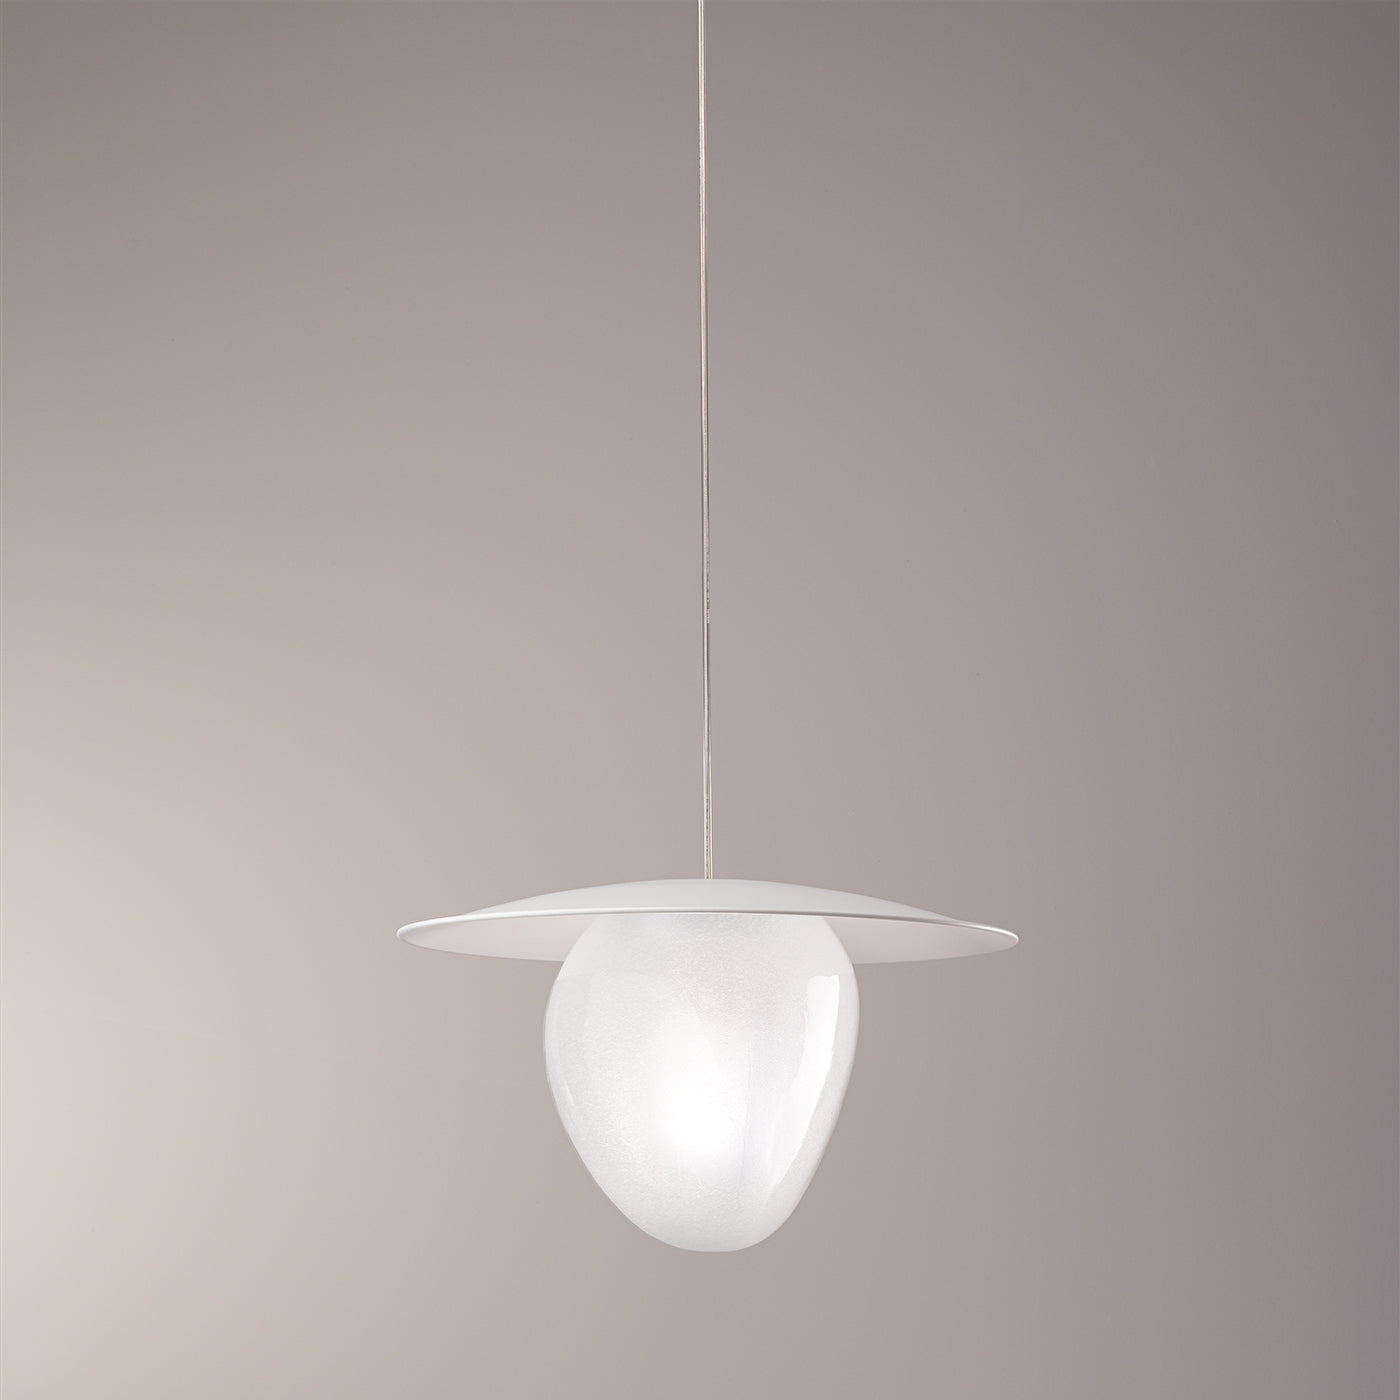 Lampe suspendue transparente Pebble #1 - Vue alternative 1